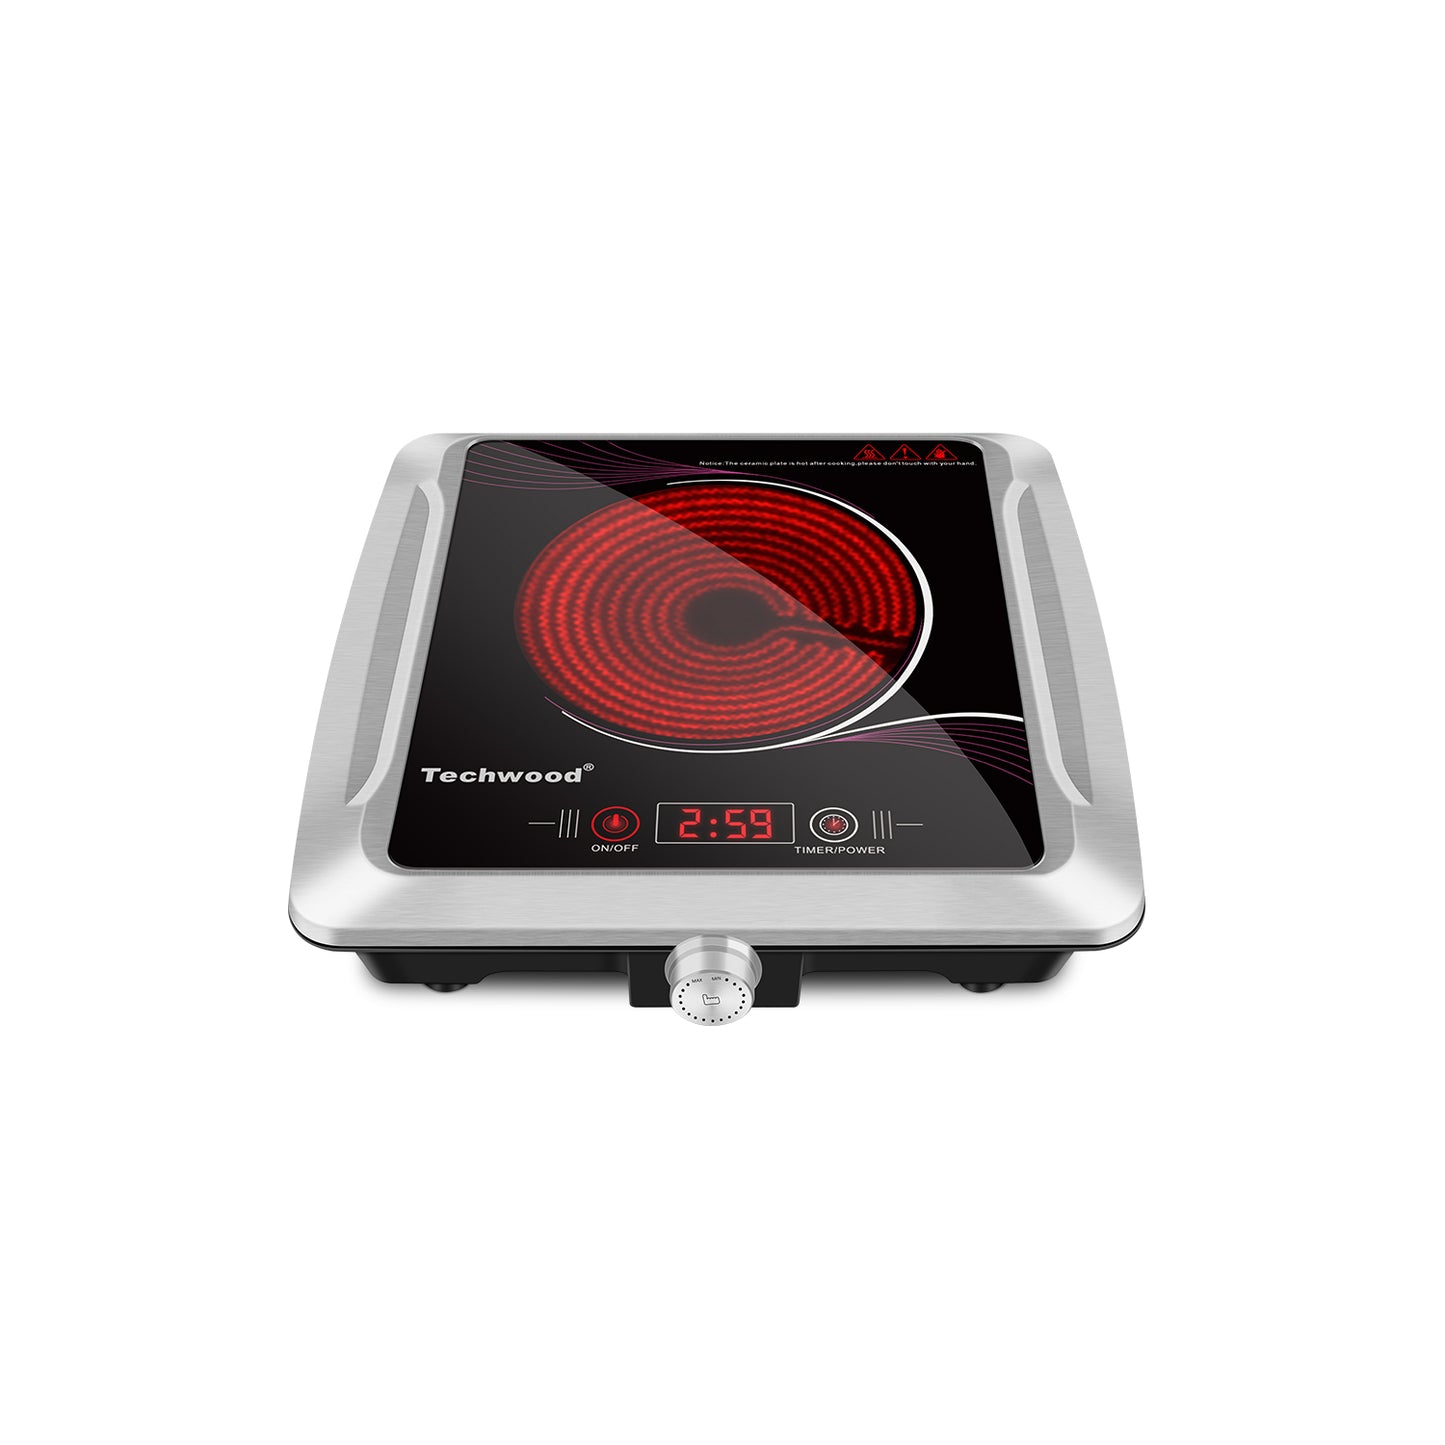 Techwood 1500W Countertop Infrared Ceramic Hot Plate